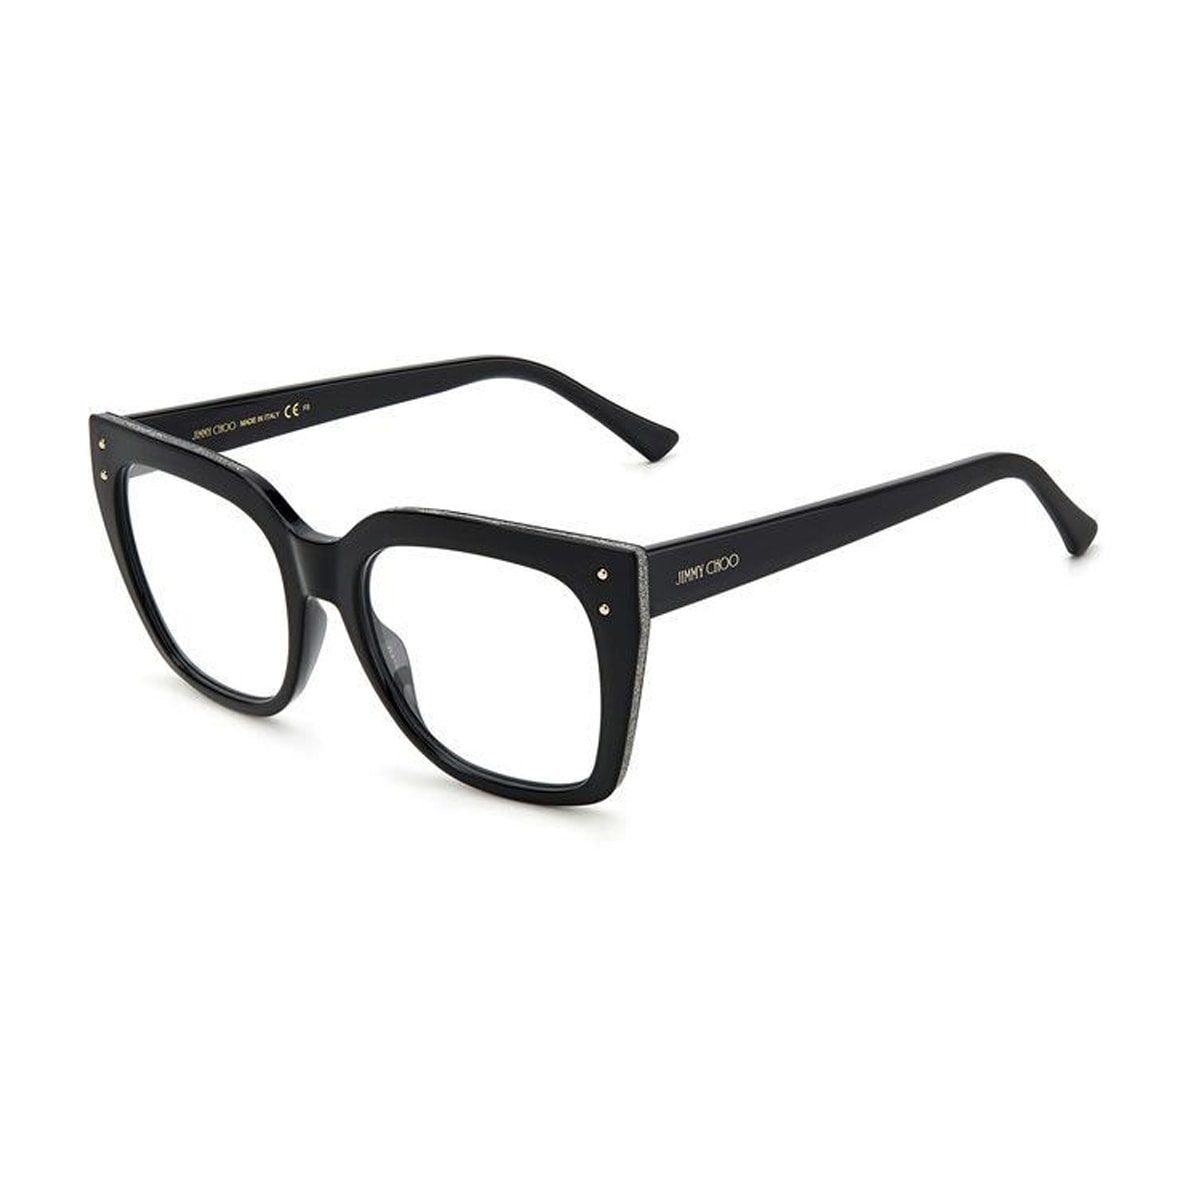 Jimmy Choo Eyewear Jc329 807/19 Black Glasses